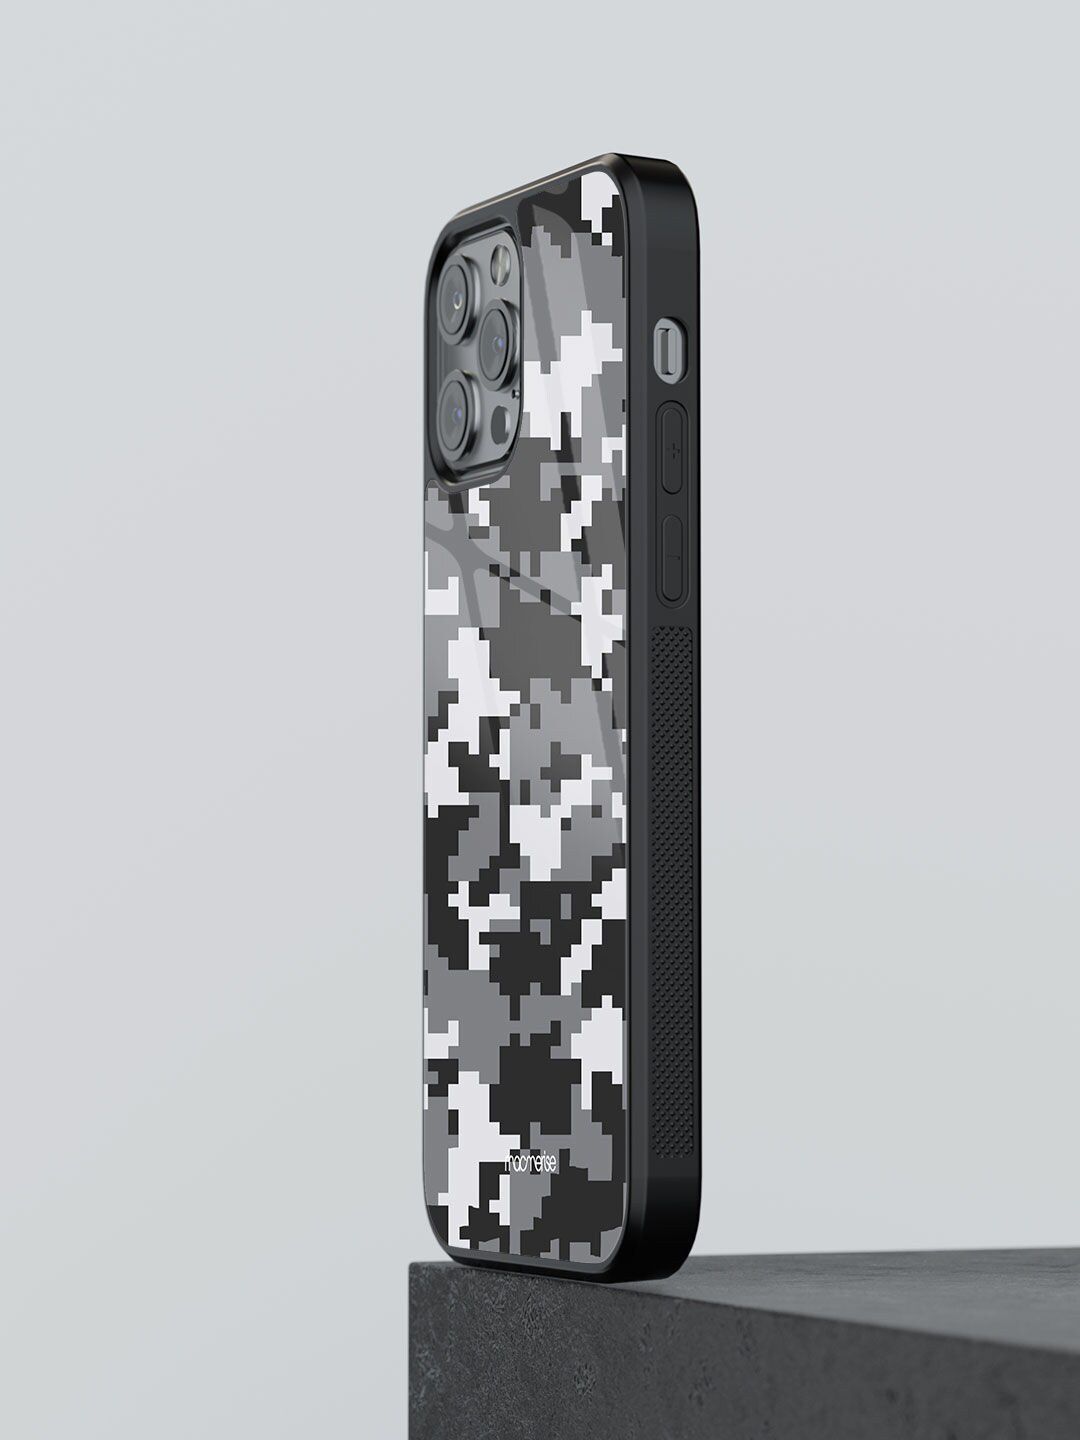 macmerise Grey Printed Camo Pixel iPhone 12 Pro Max Glass Phone Back Case Price in India